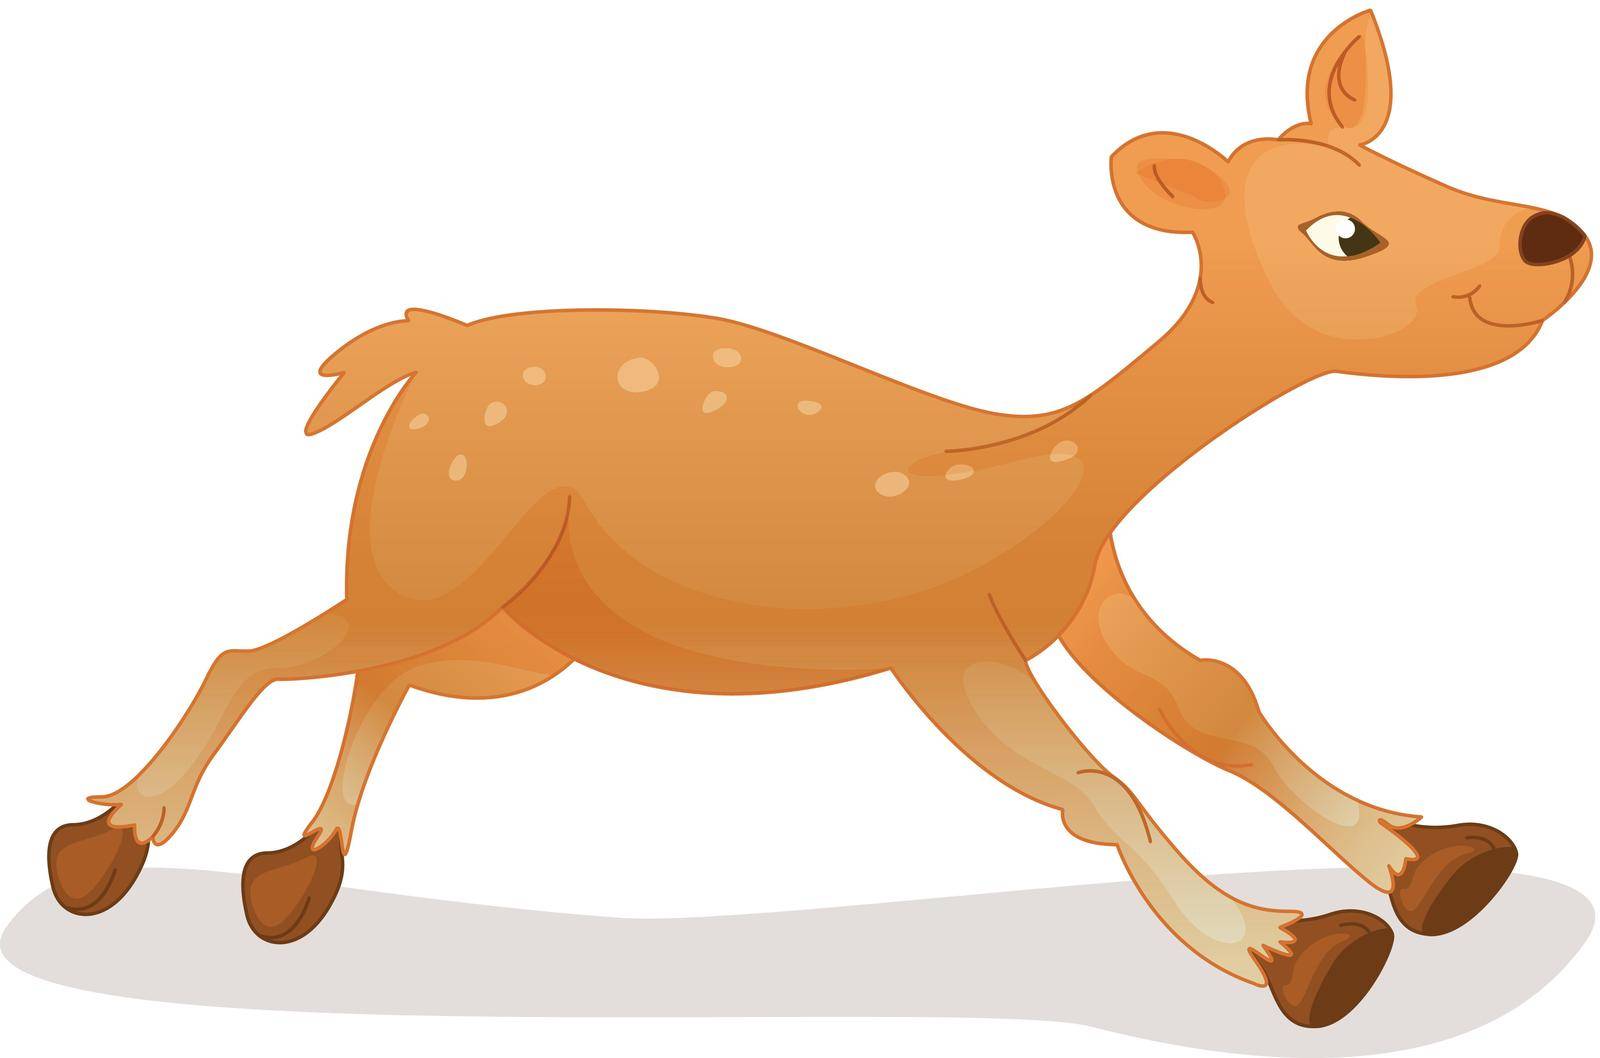 Illustration of a cute deer